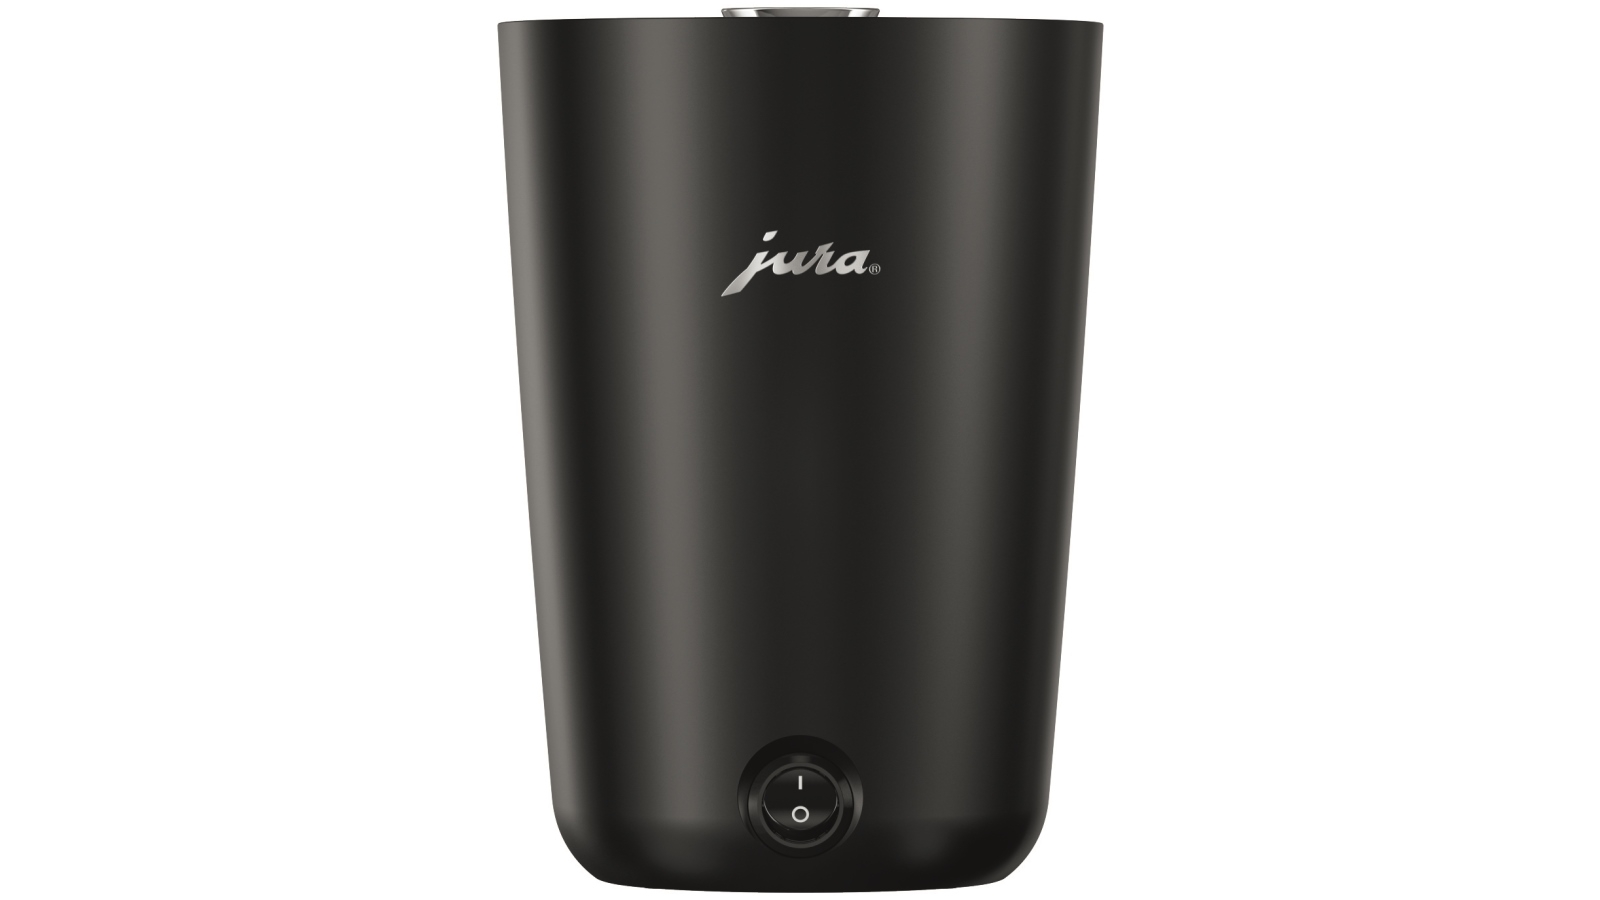  Jura 72229 Cup Warmer, 1, Black: Home & Kitchen